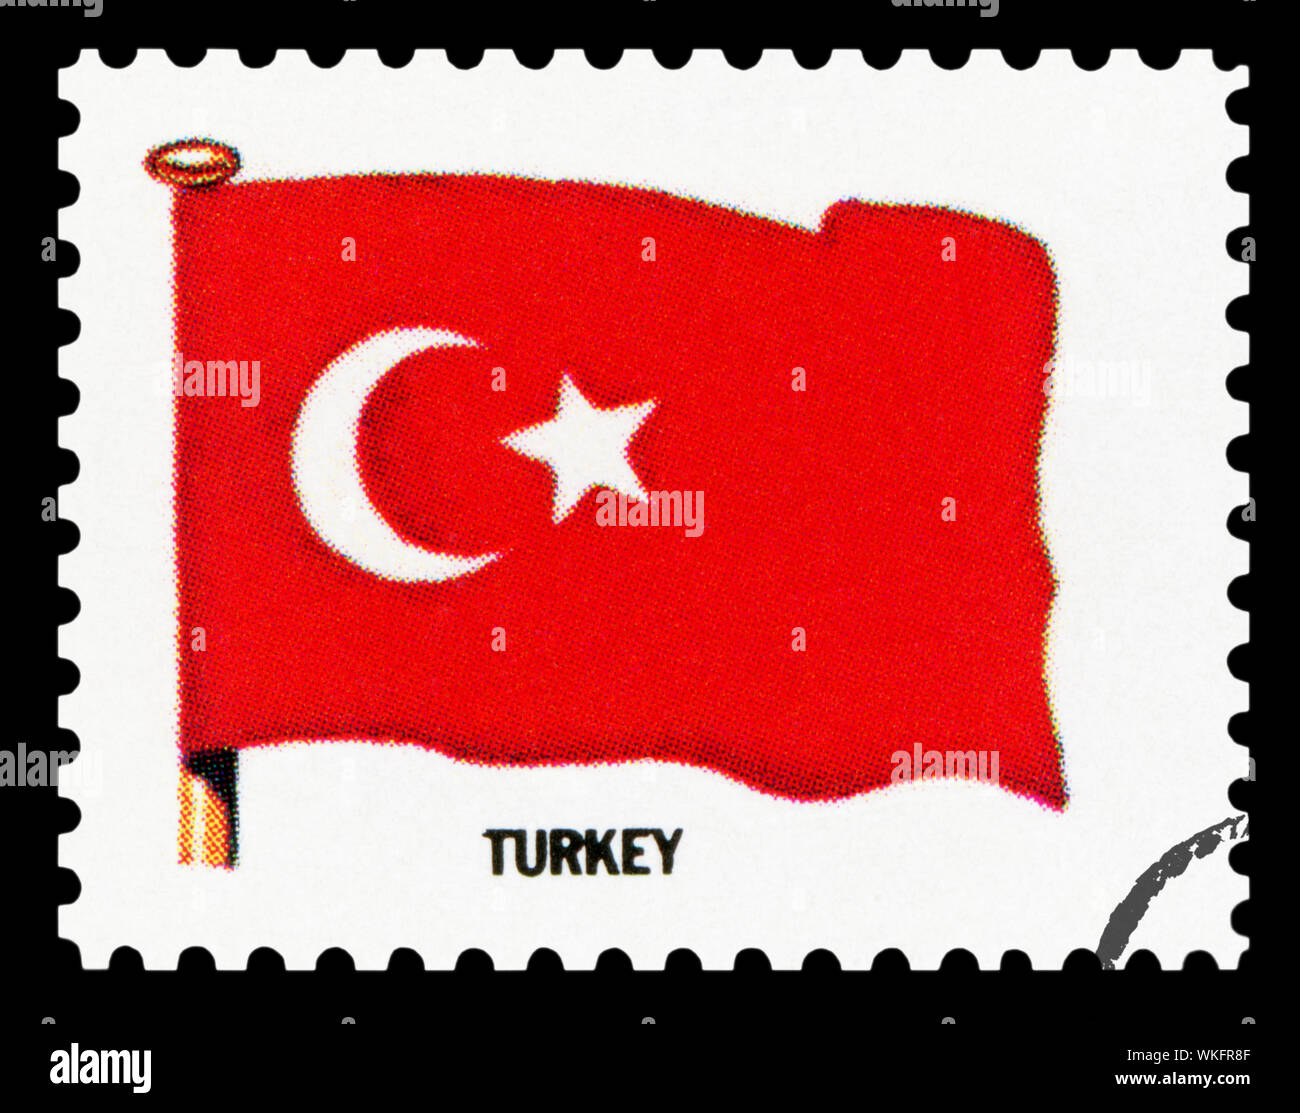 TURKEY FLAG - Postage Stamp isolated on black background. Stock Photo